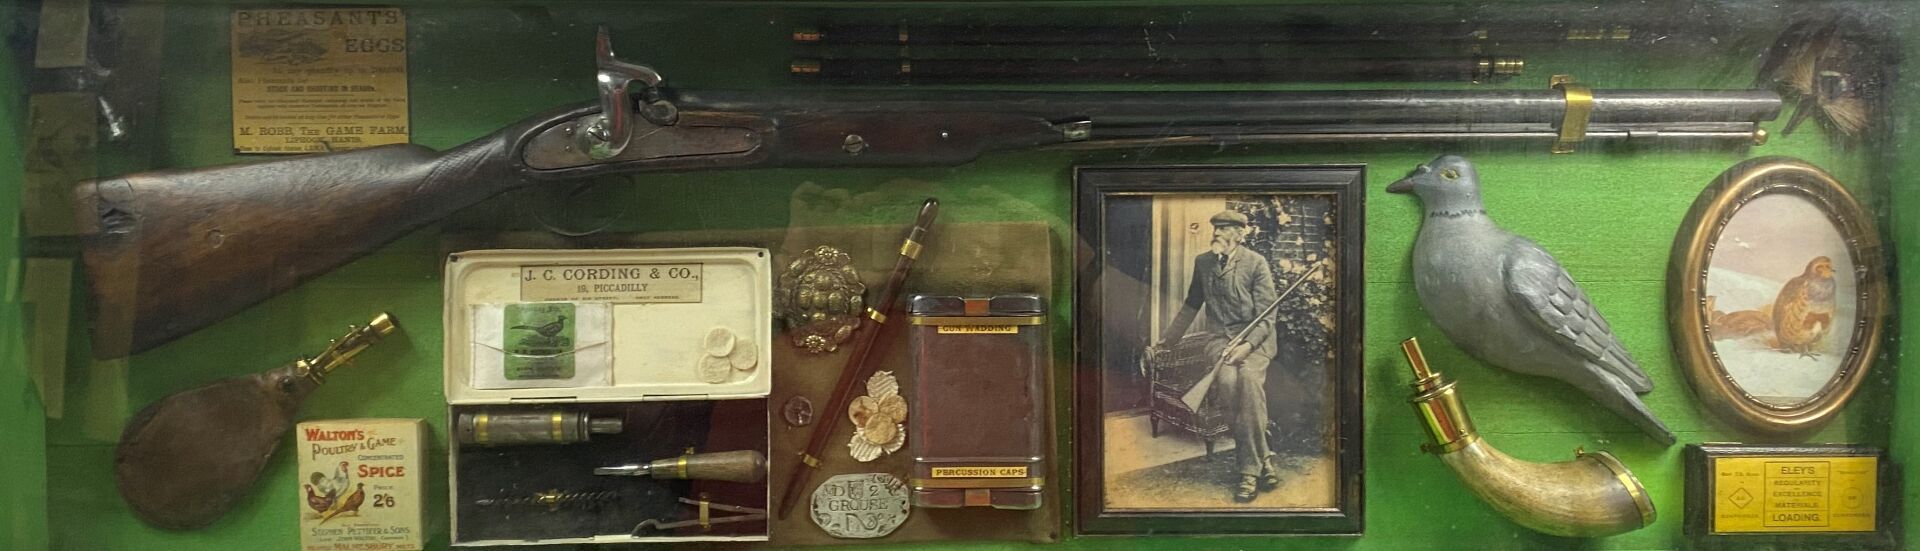 Null 猎人的纪念品在玻璃下的框架中，包括一支打击步枪，火药瓶，一个相框，一个代表鹧鸪的小椭圆形画，一个狐狸头，小工具等。

42 x 124厘米